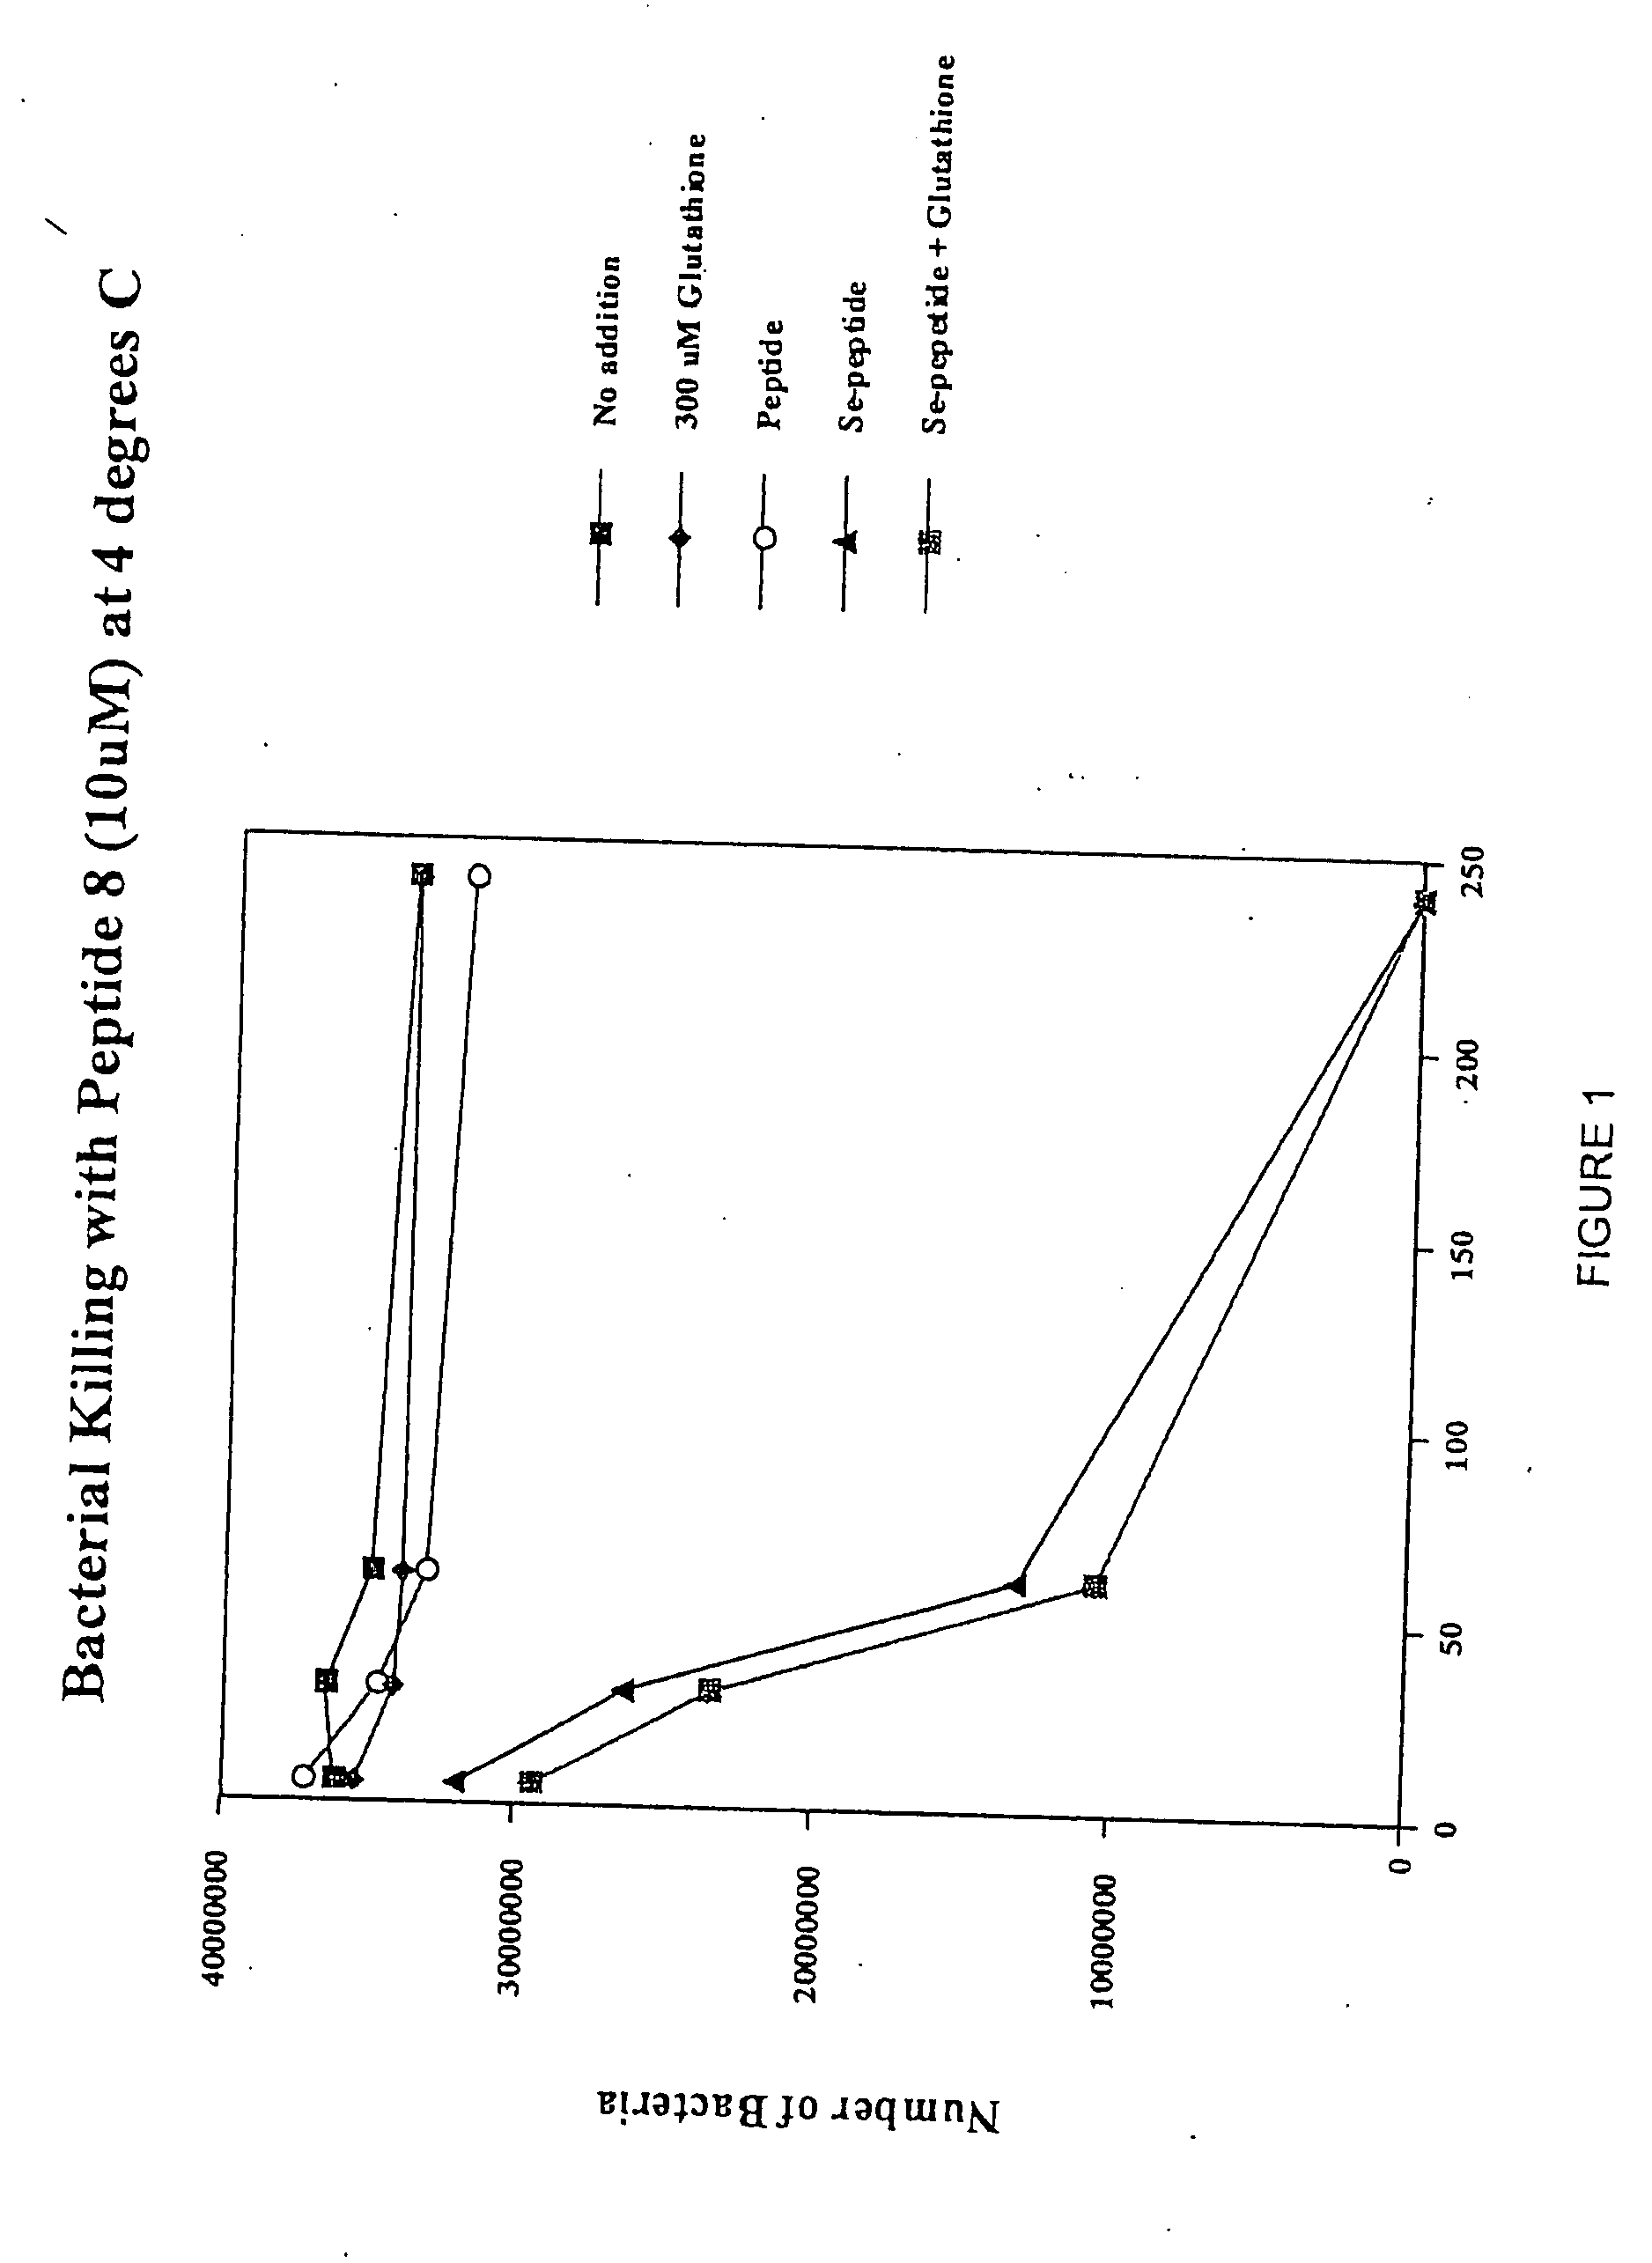 Selenium-based biocidal formulations and methods of use thereof